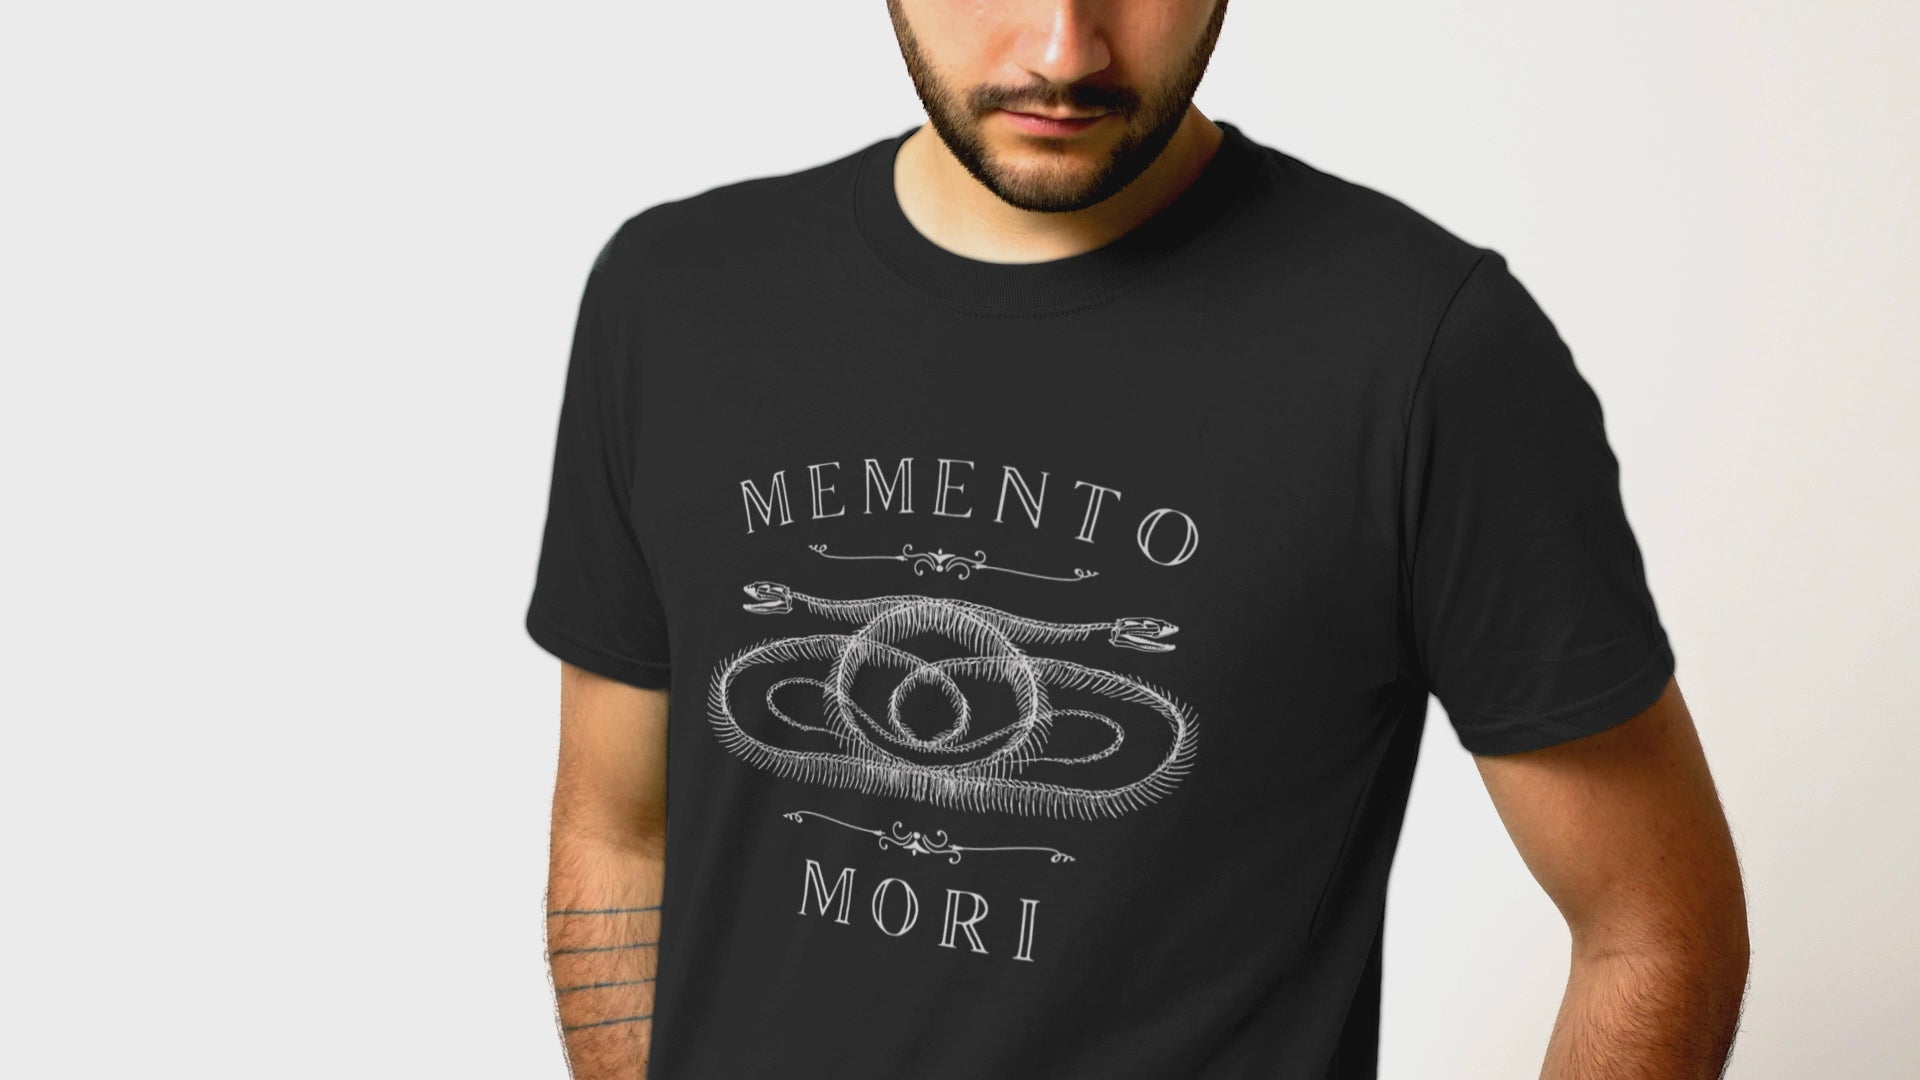 Goth Aesthetic Plus Size Clothing Memento Mori Snake Skeleton Shirt